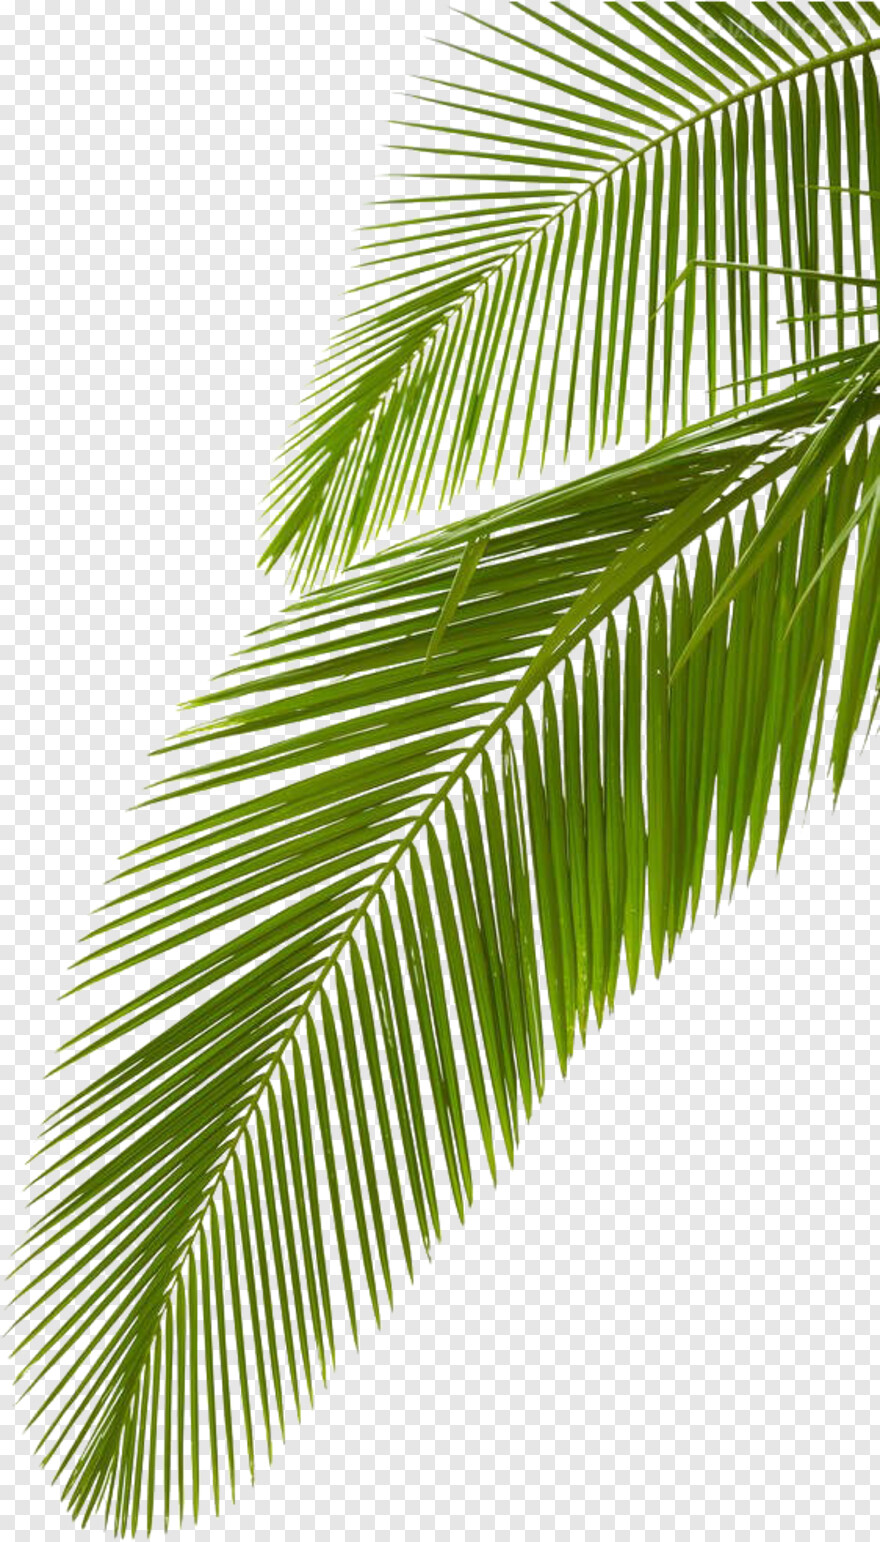  Palm Tree Clip Art, Palm Leaf, Palm Branch, Palm Tree Silhouette, Palm Tree Leaf, Palm Tree Vector